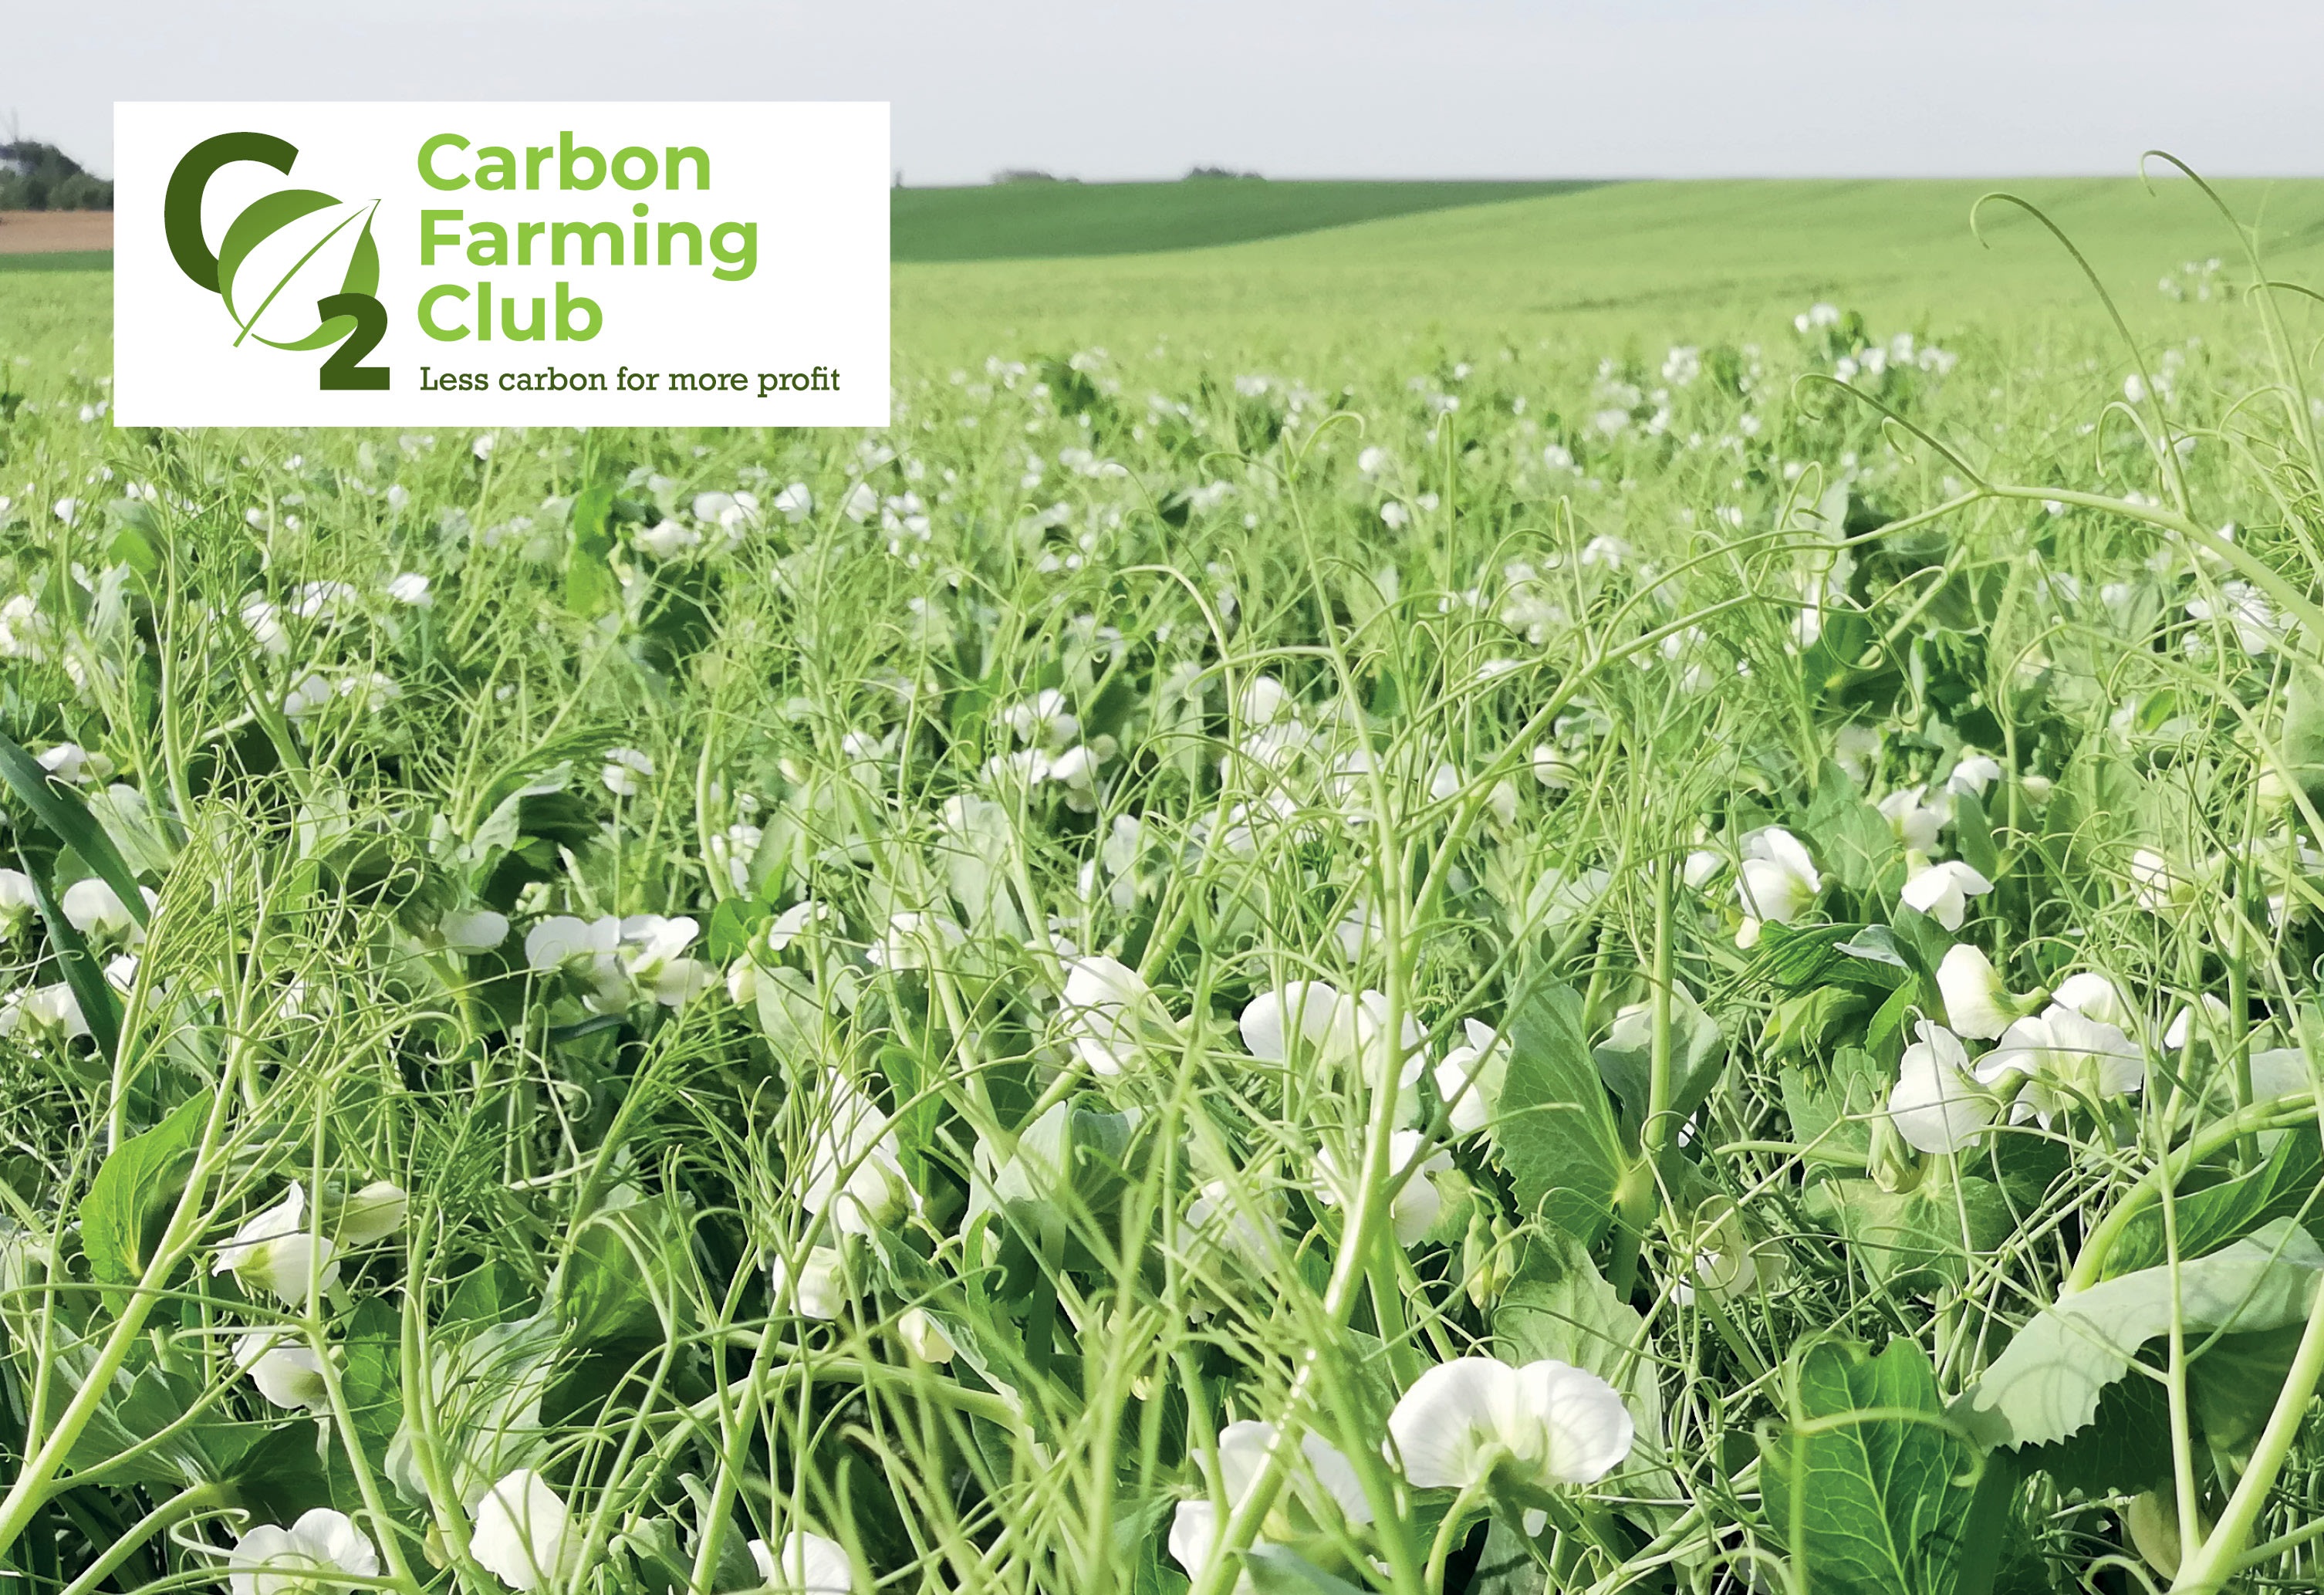 Carbon Farming Club